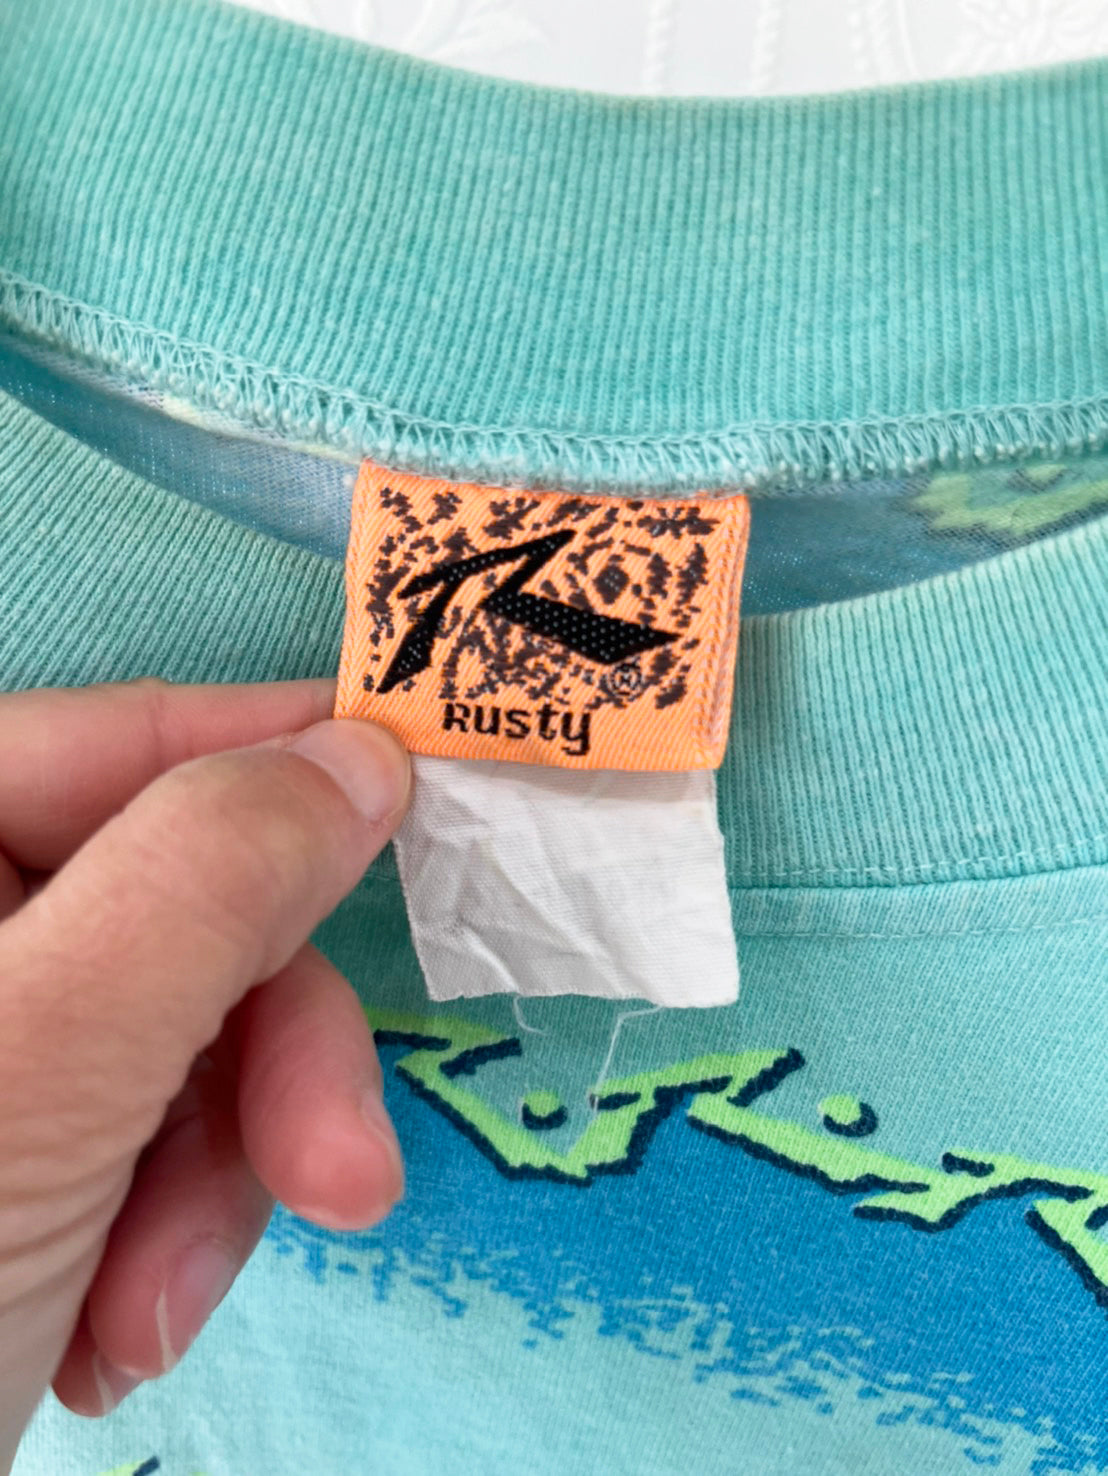 【Rusty】90's Rusty Surf T-shirt made in USA (men's XL相当)